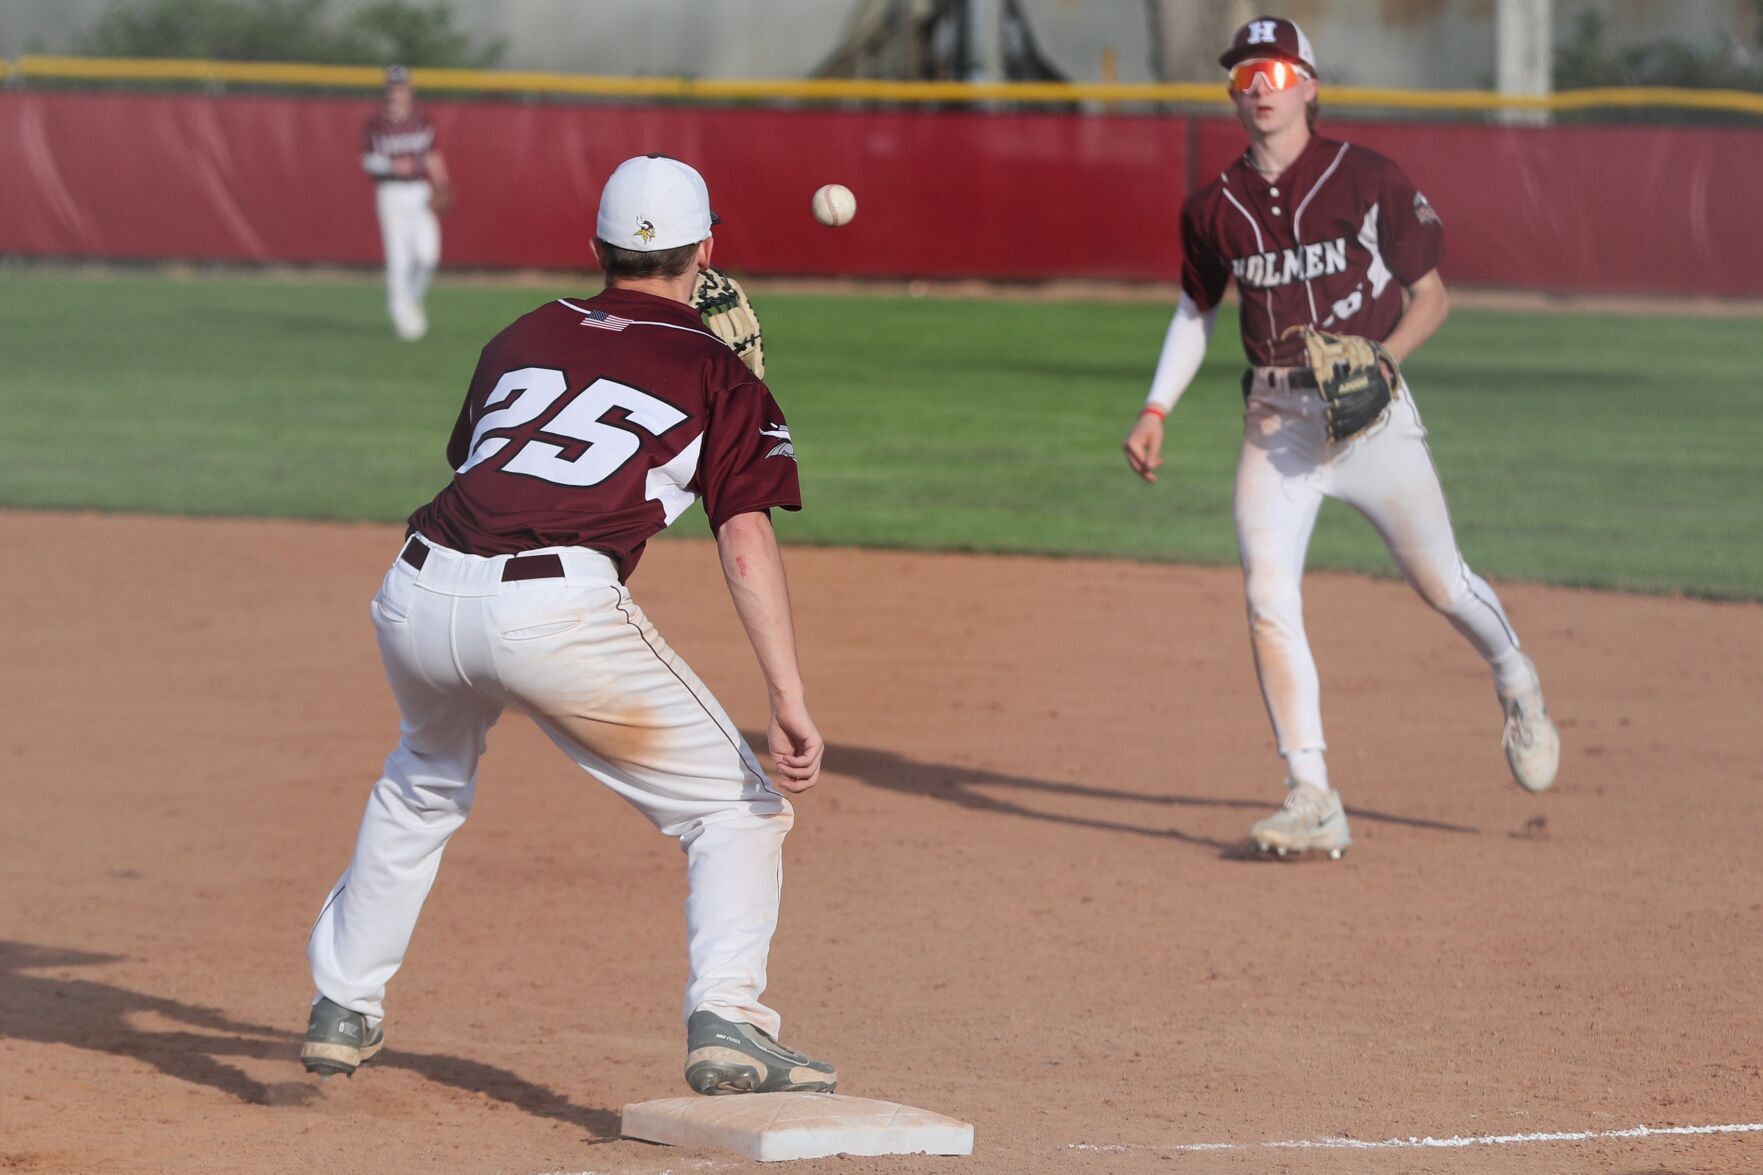 High school baseball roundup: Blugolds take control of MVC with David n-hitter